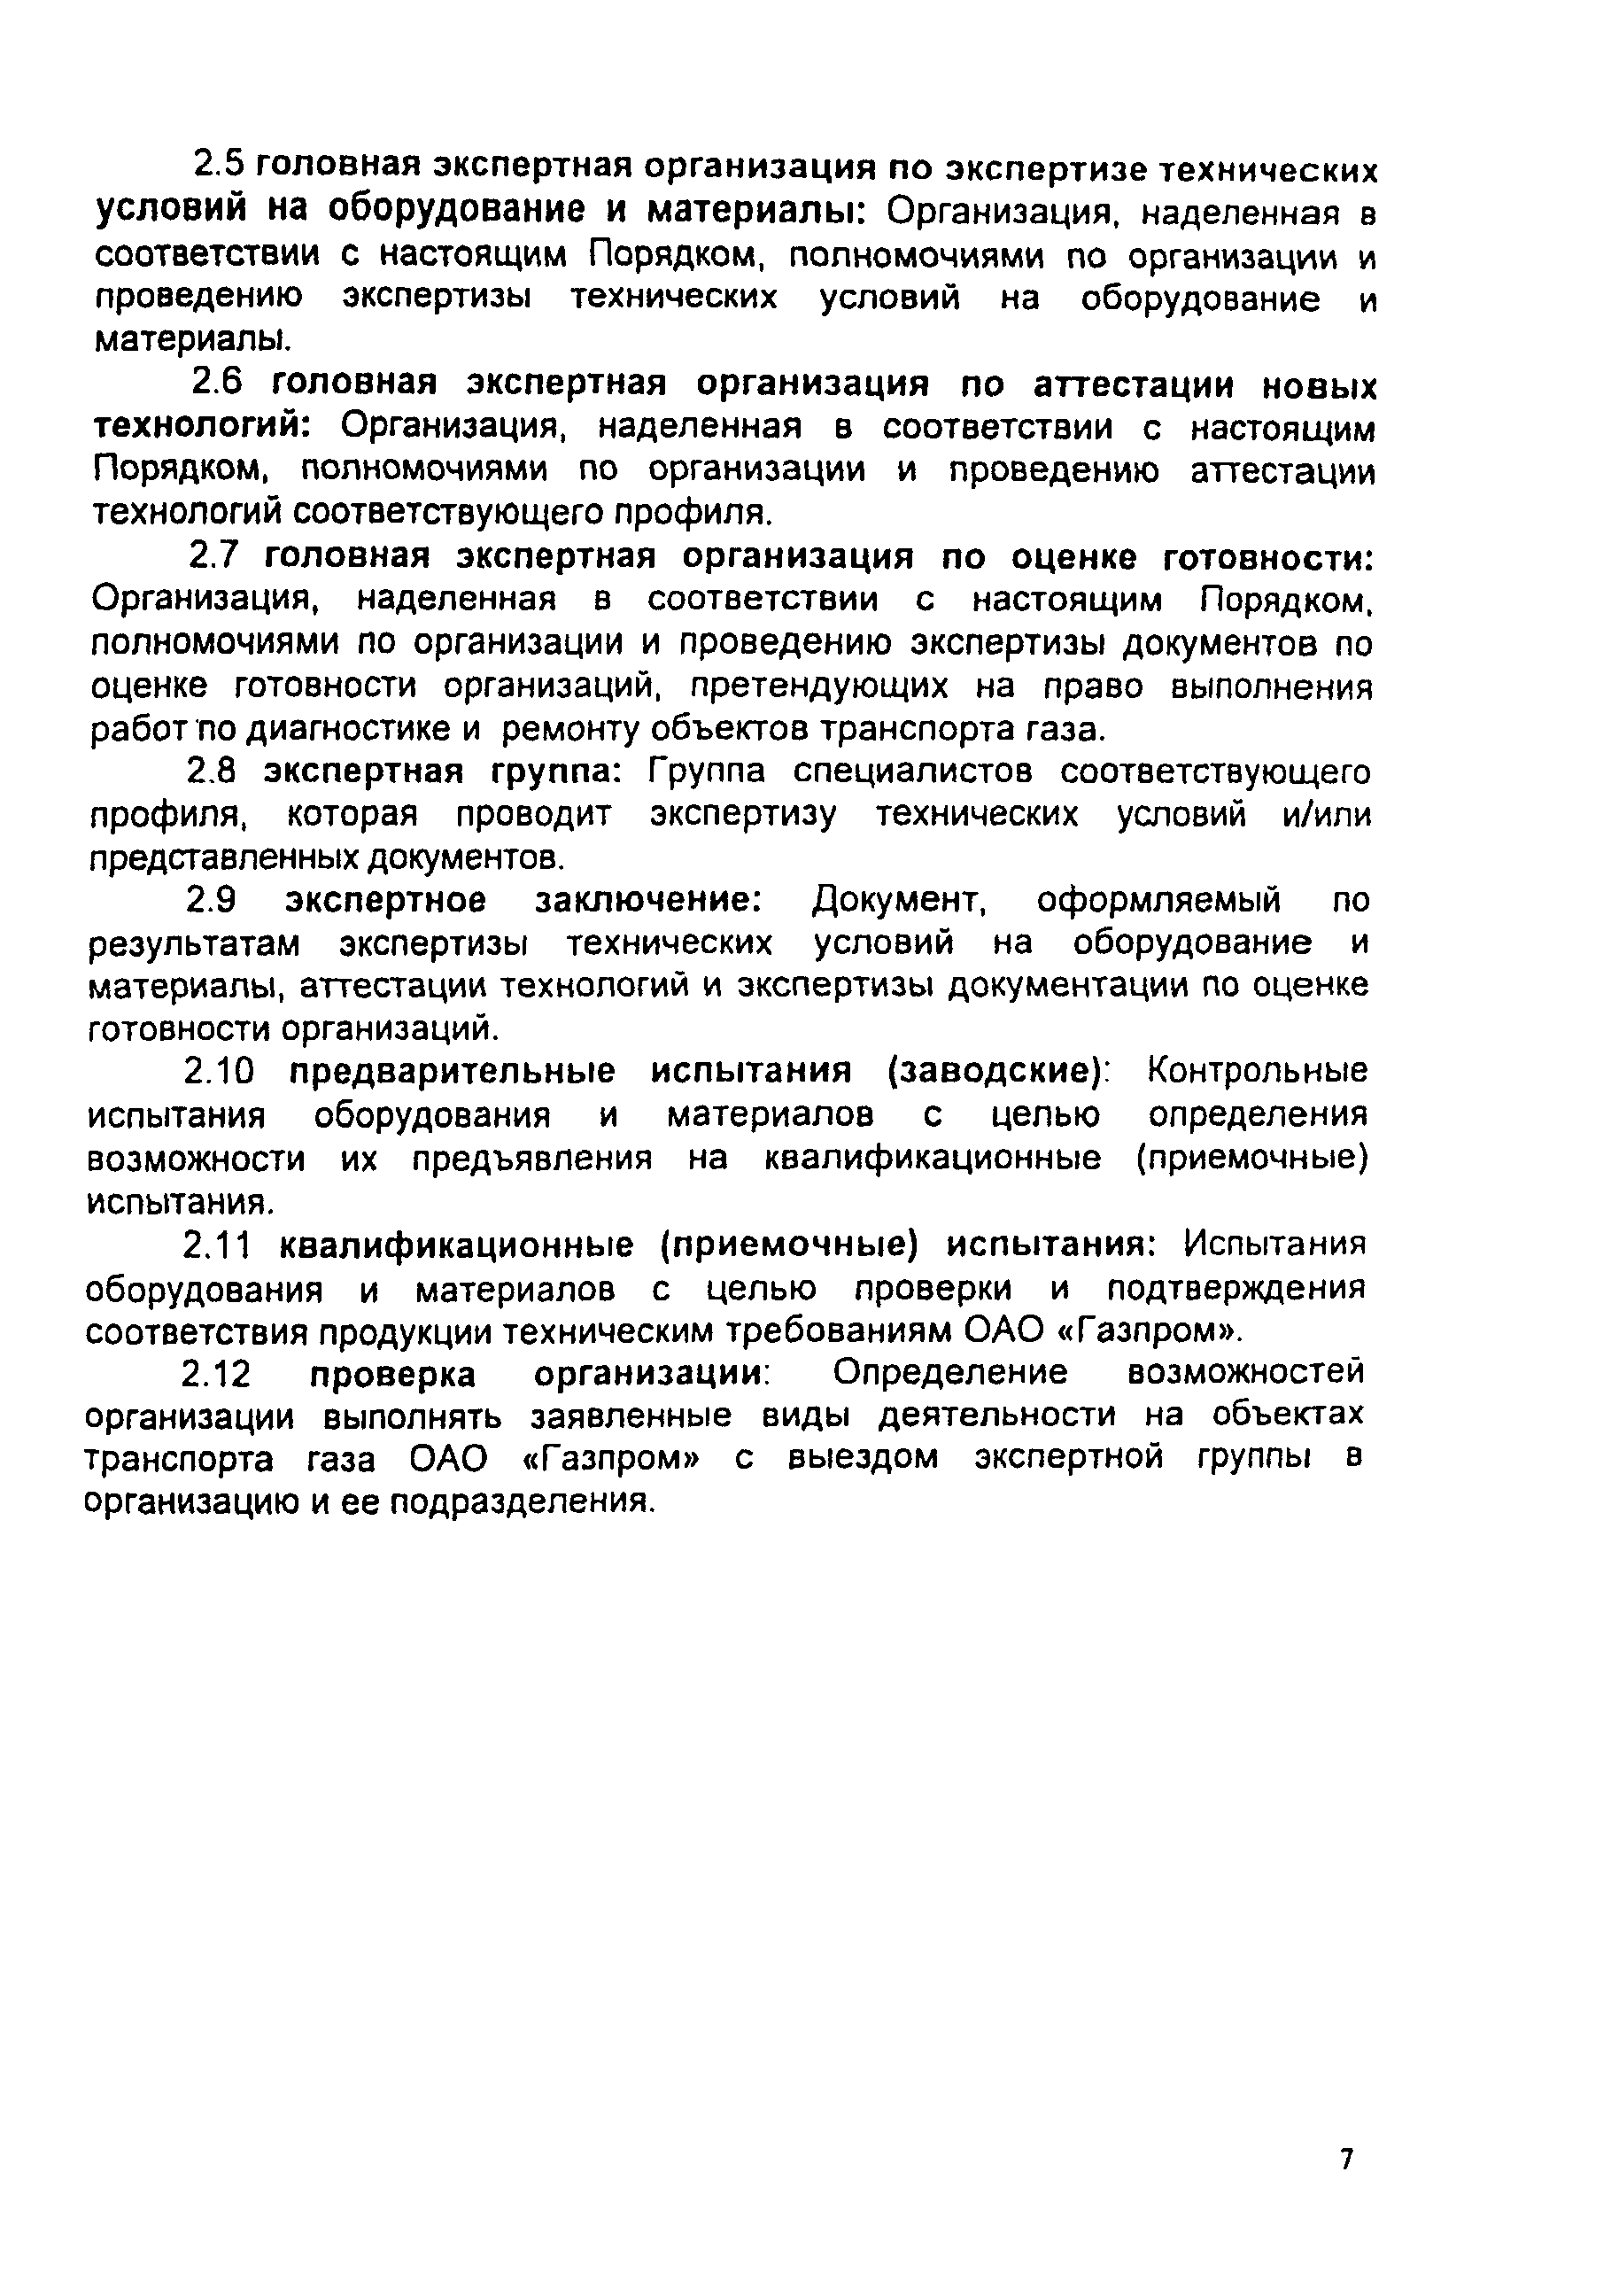 СТО Газпром 2-3.5-046-2006